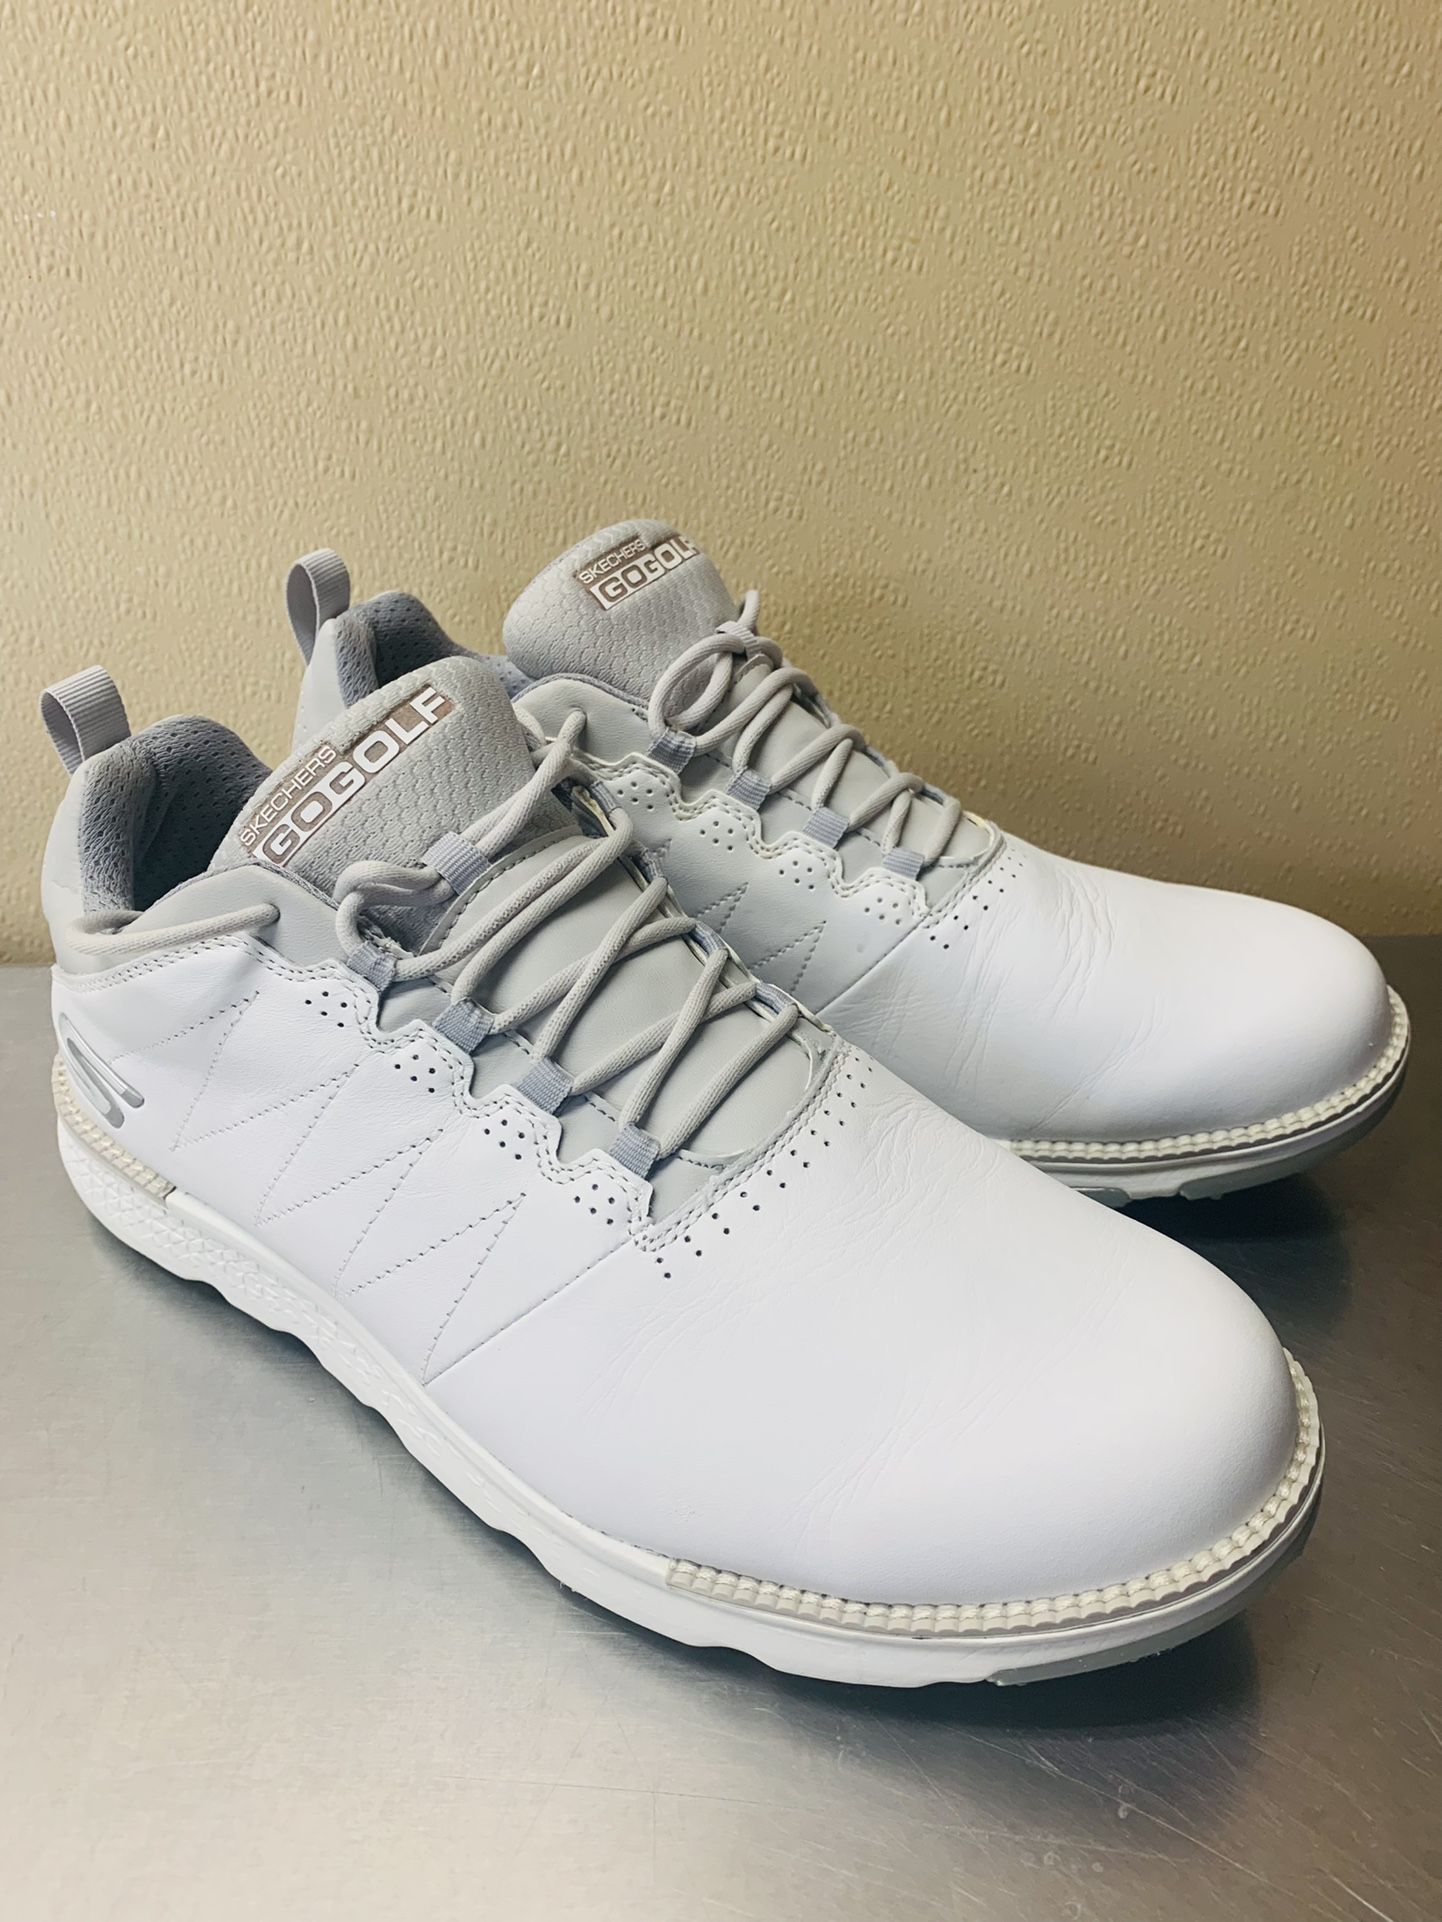 Golf Shoes 10.5